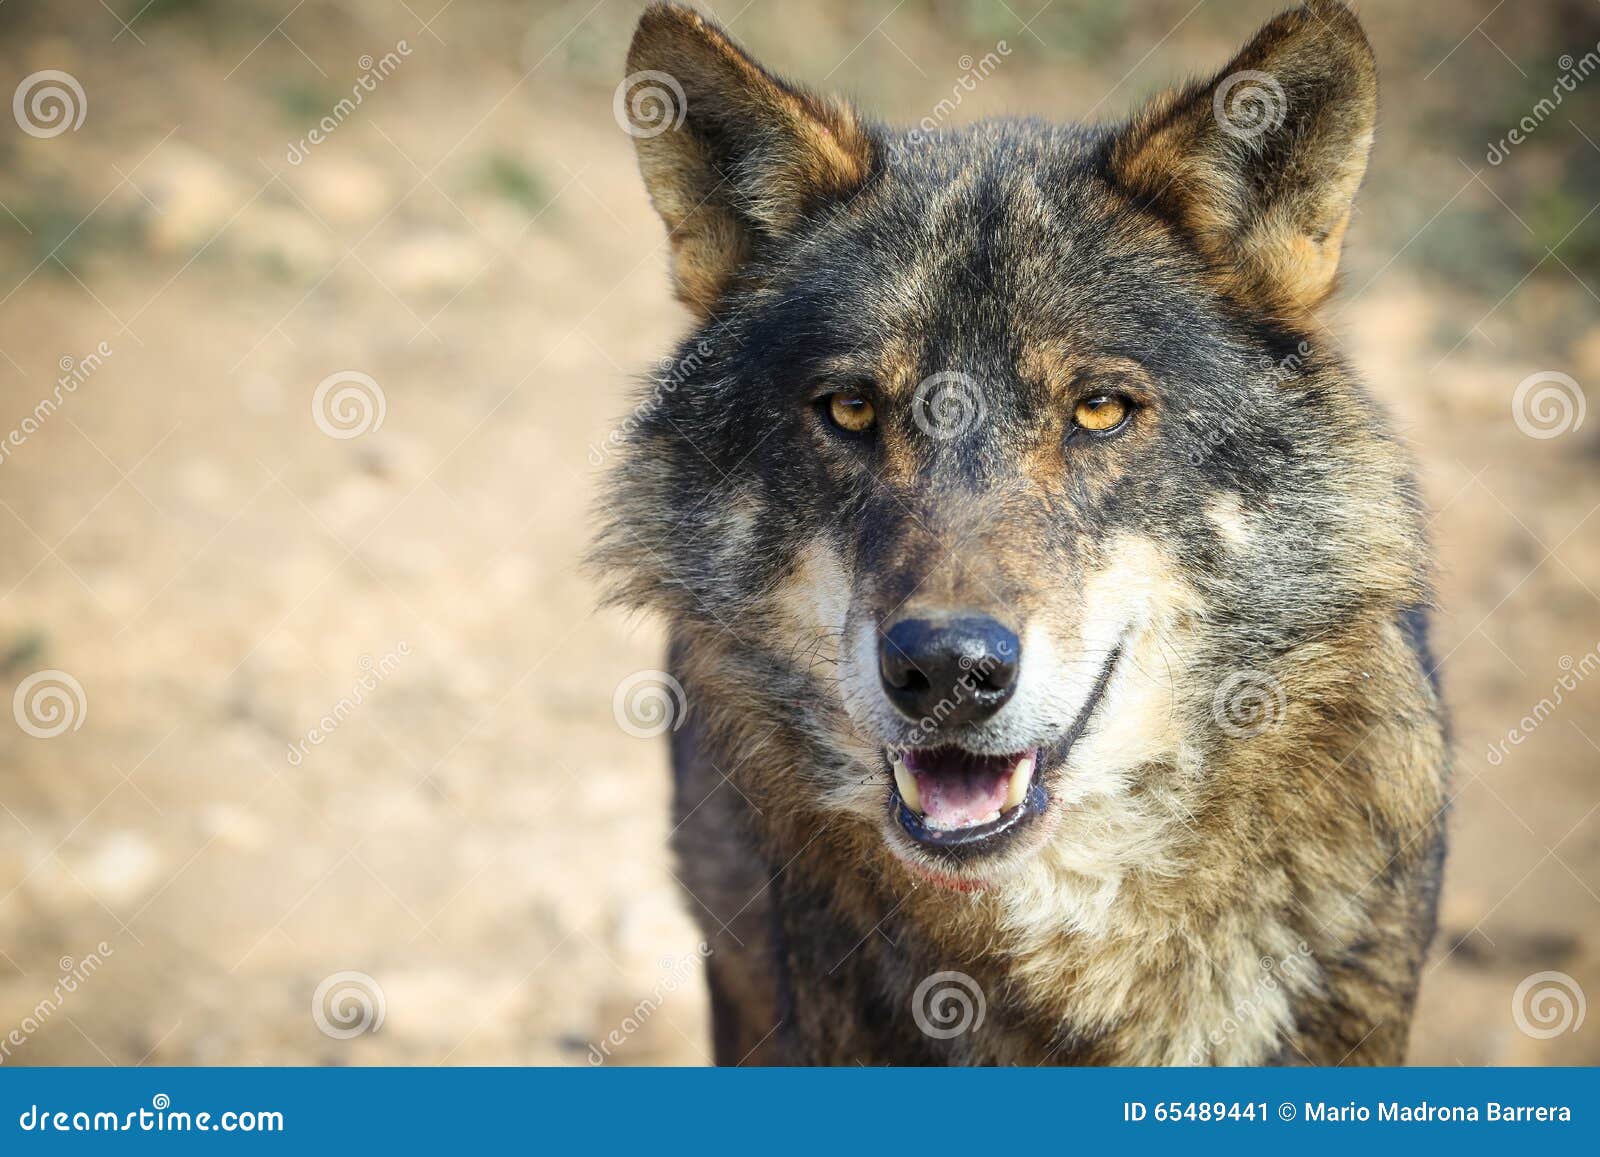 iberian wolf